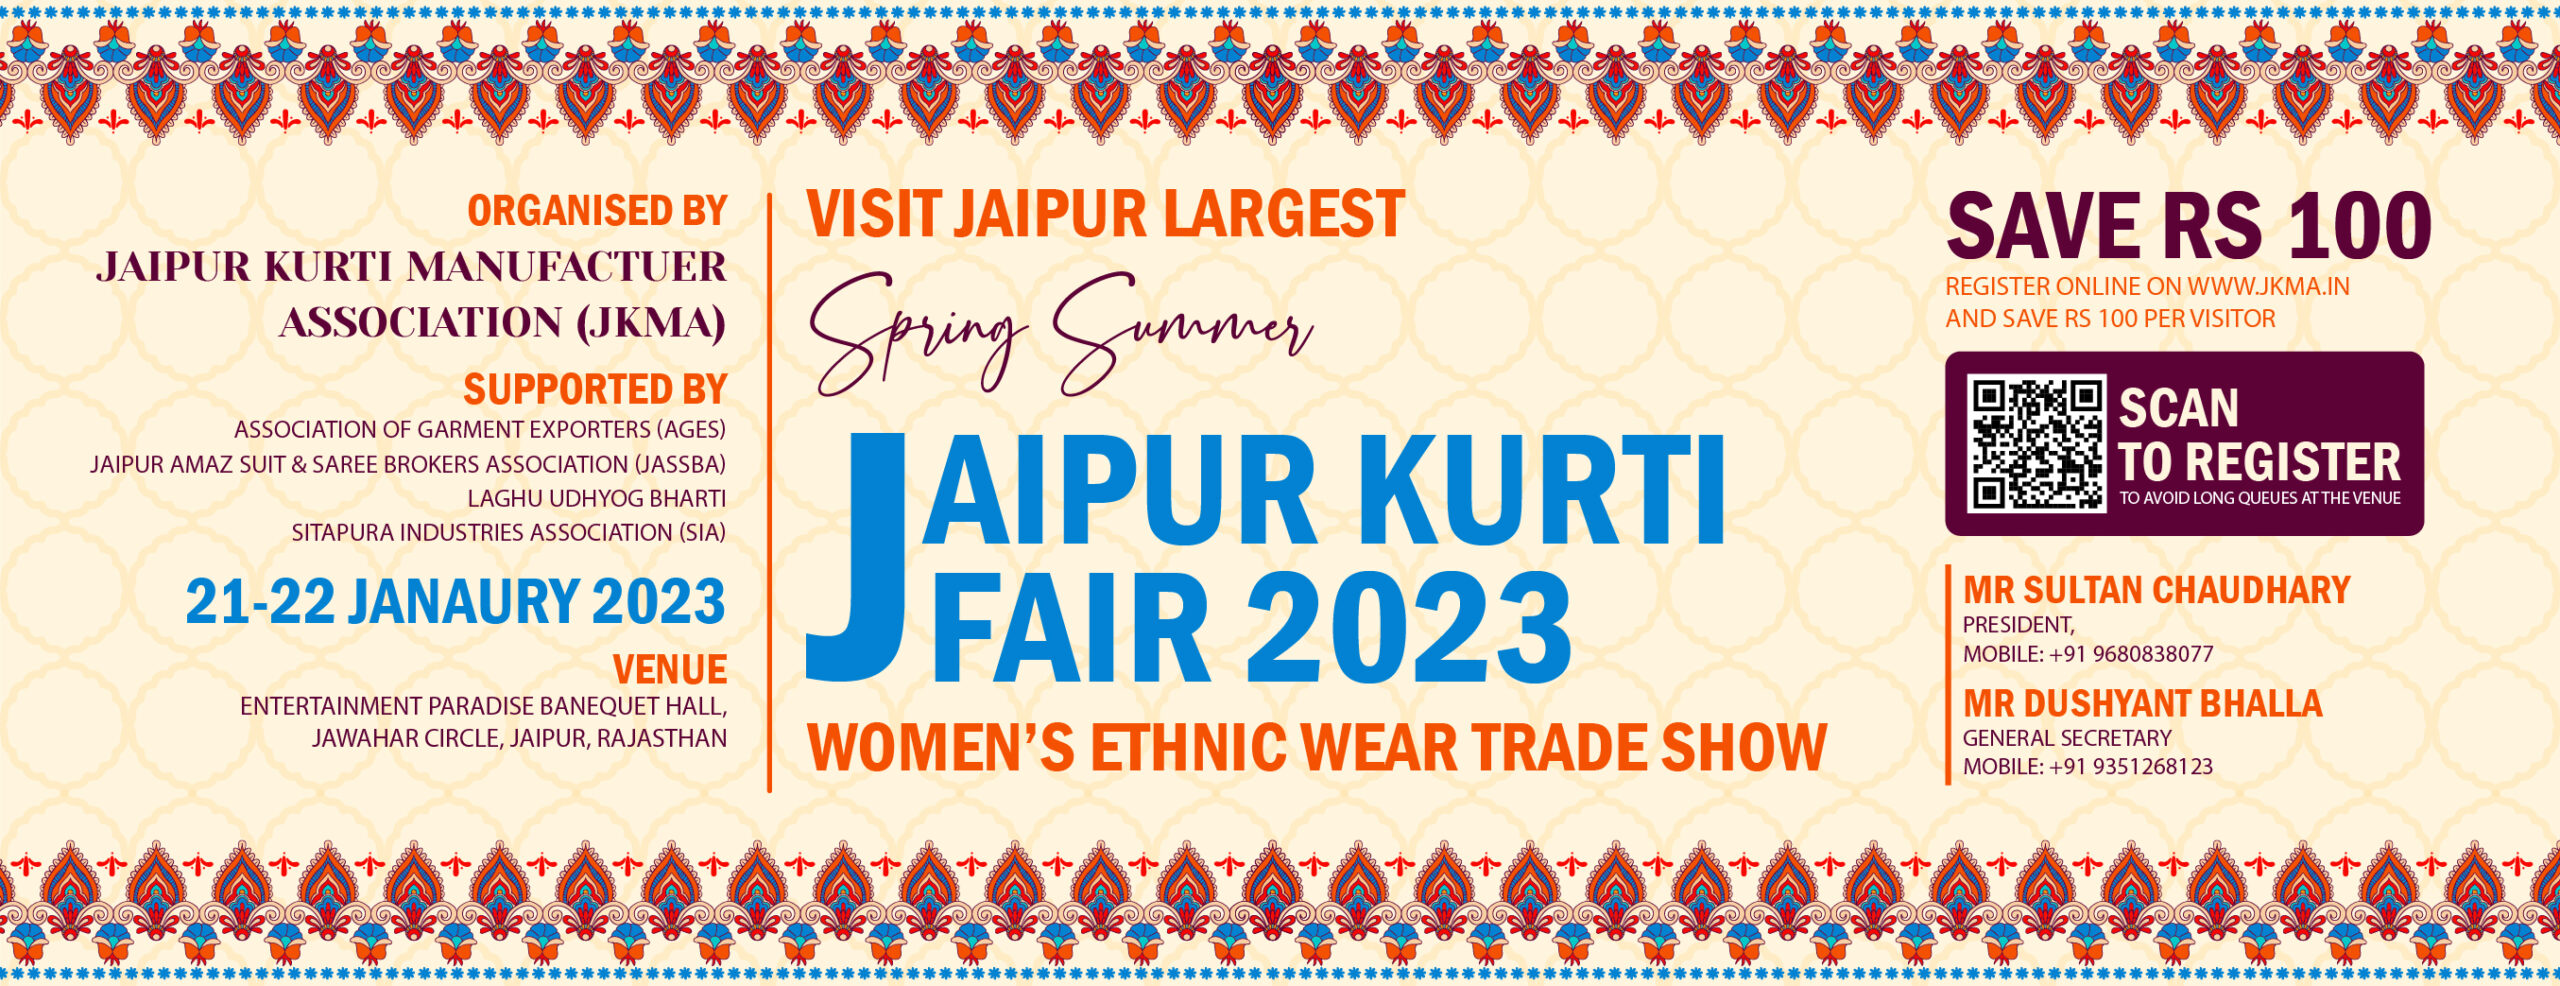 kurti fair in jaipur, kurti expo in jaipur